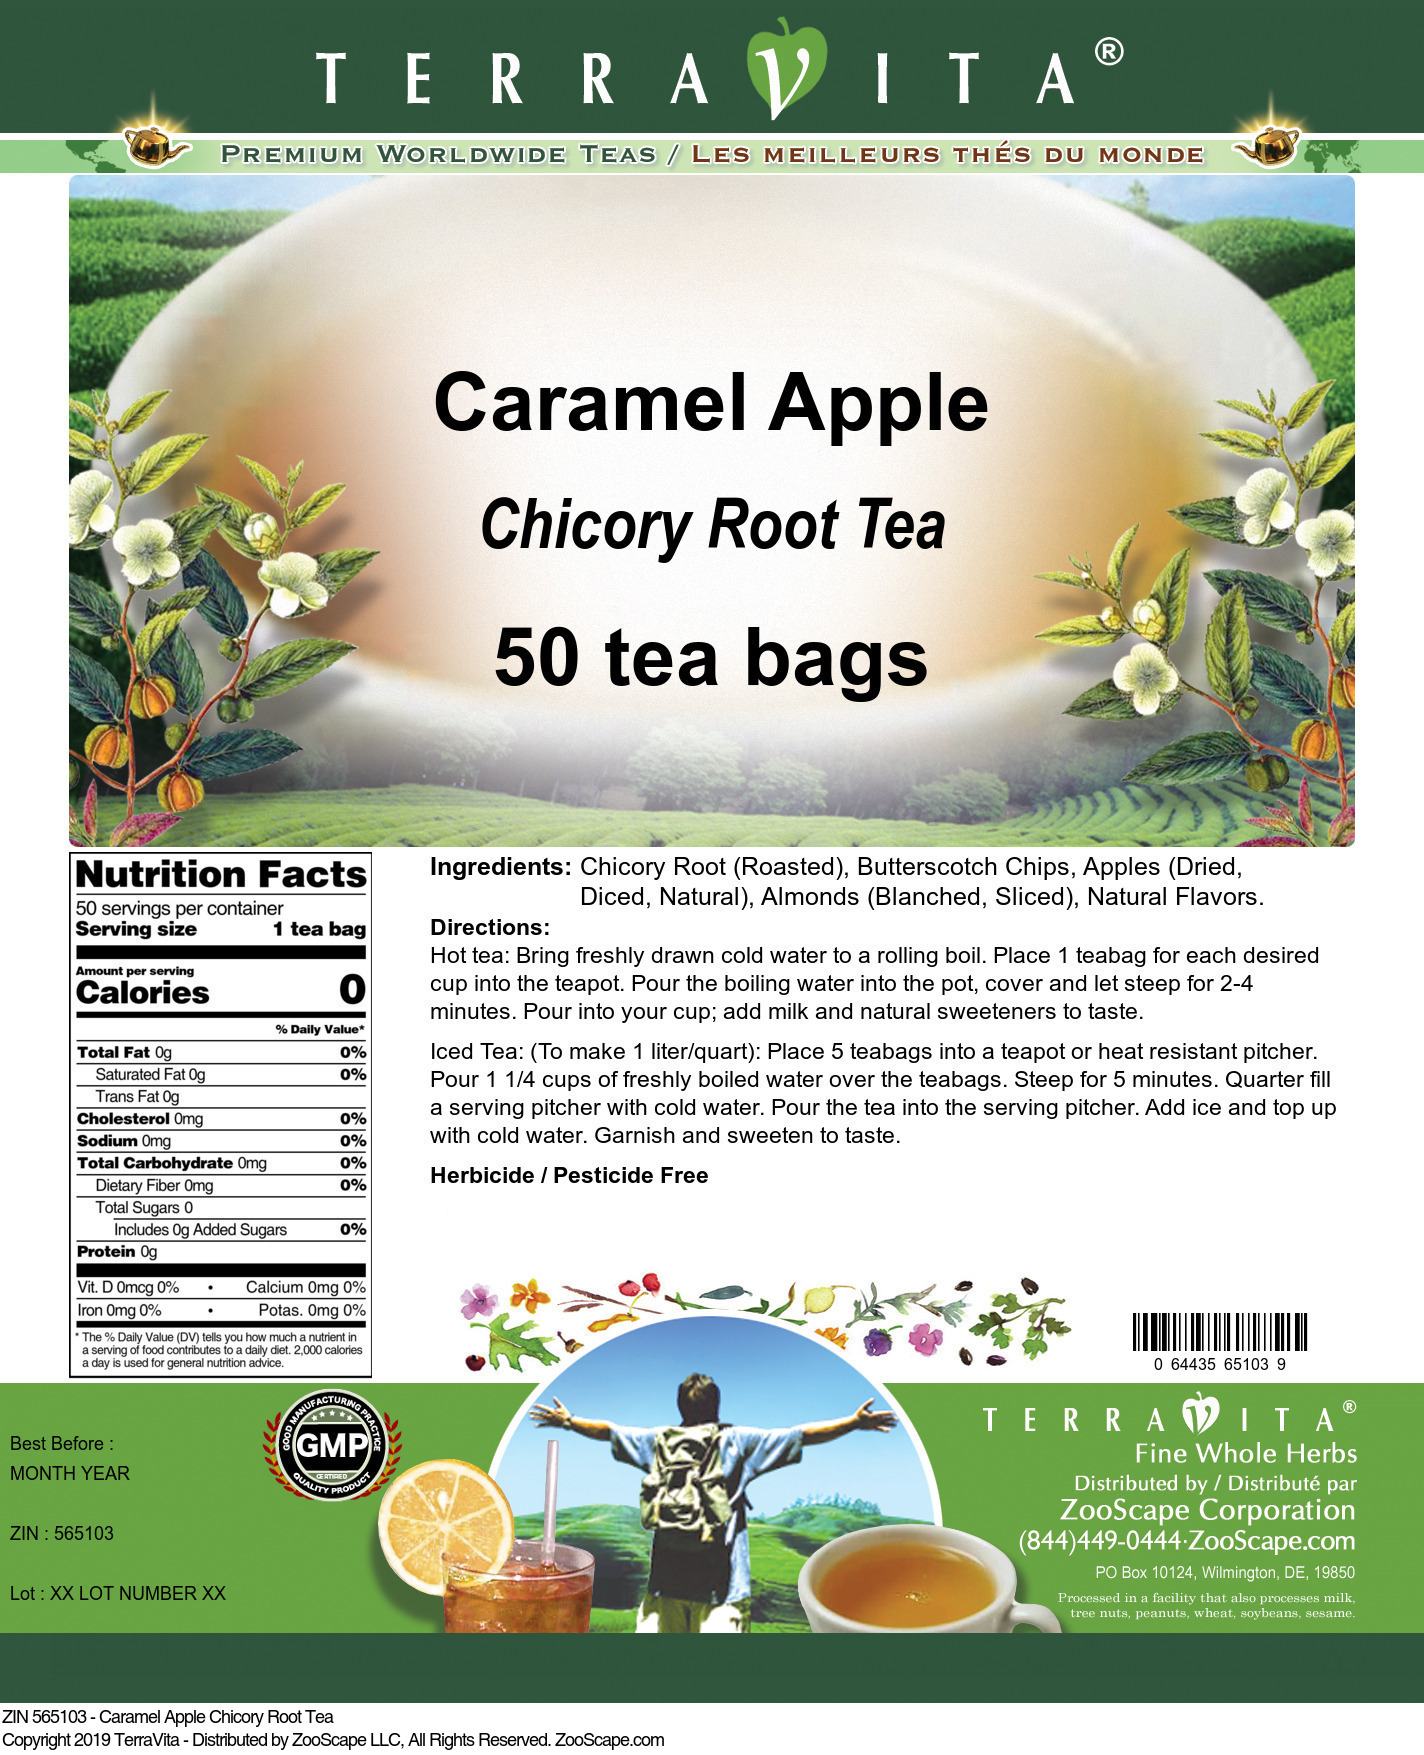 Caramel Apple Chicory Root Tea - Label